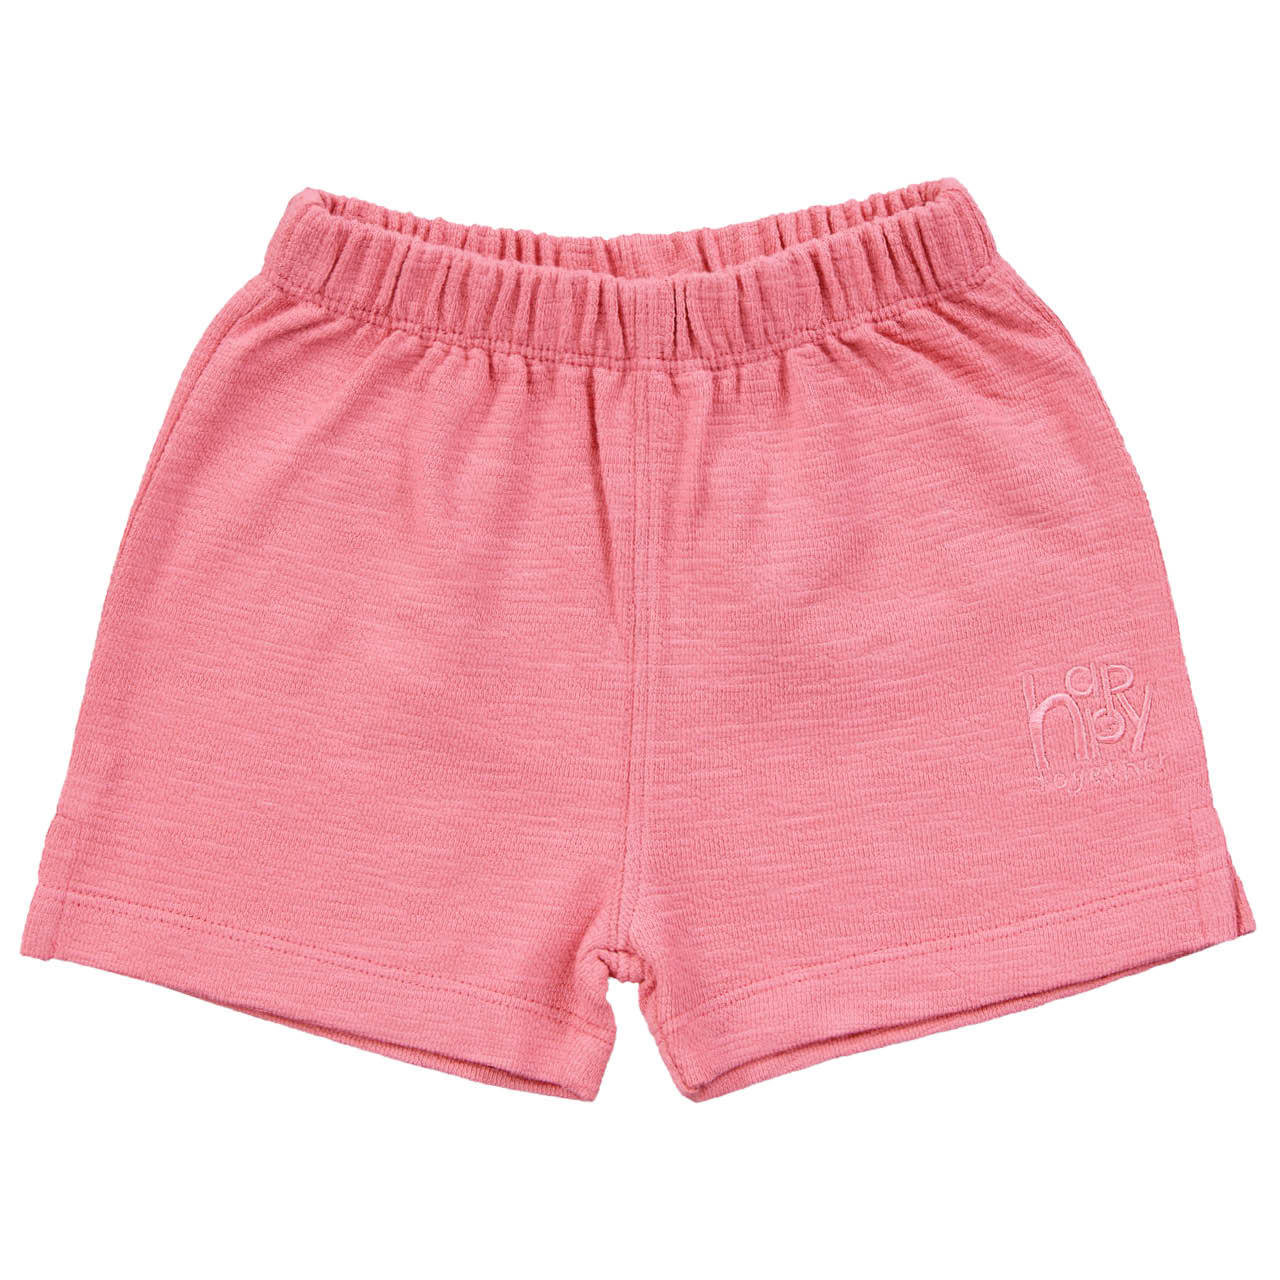 Babyshorts Sommer-Sweat pink